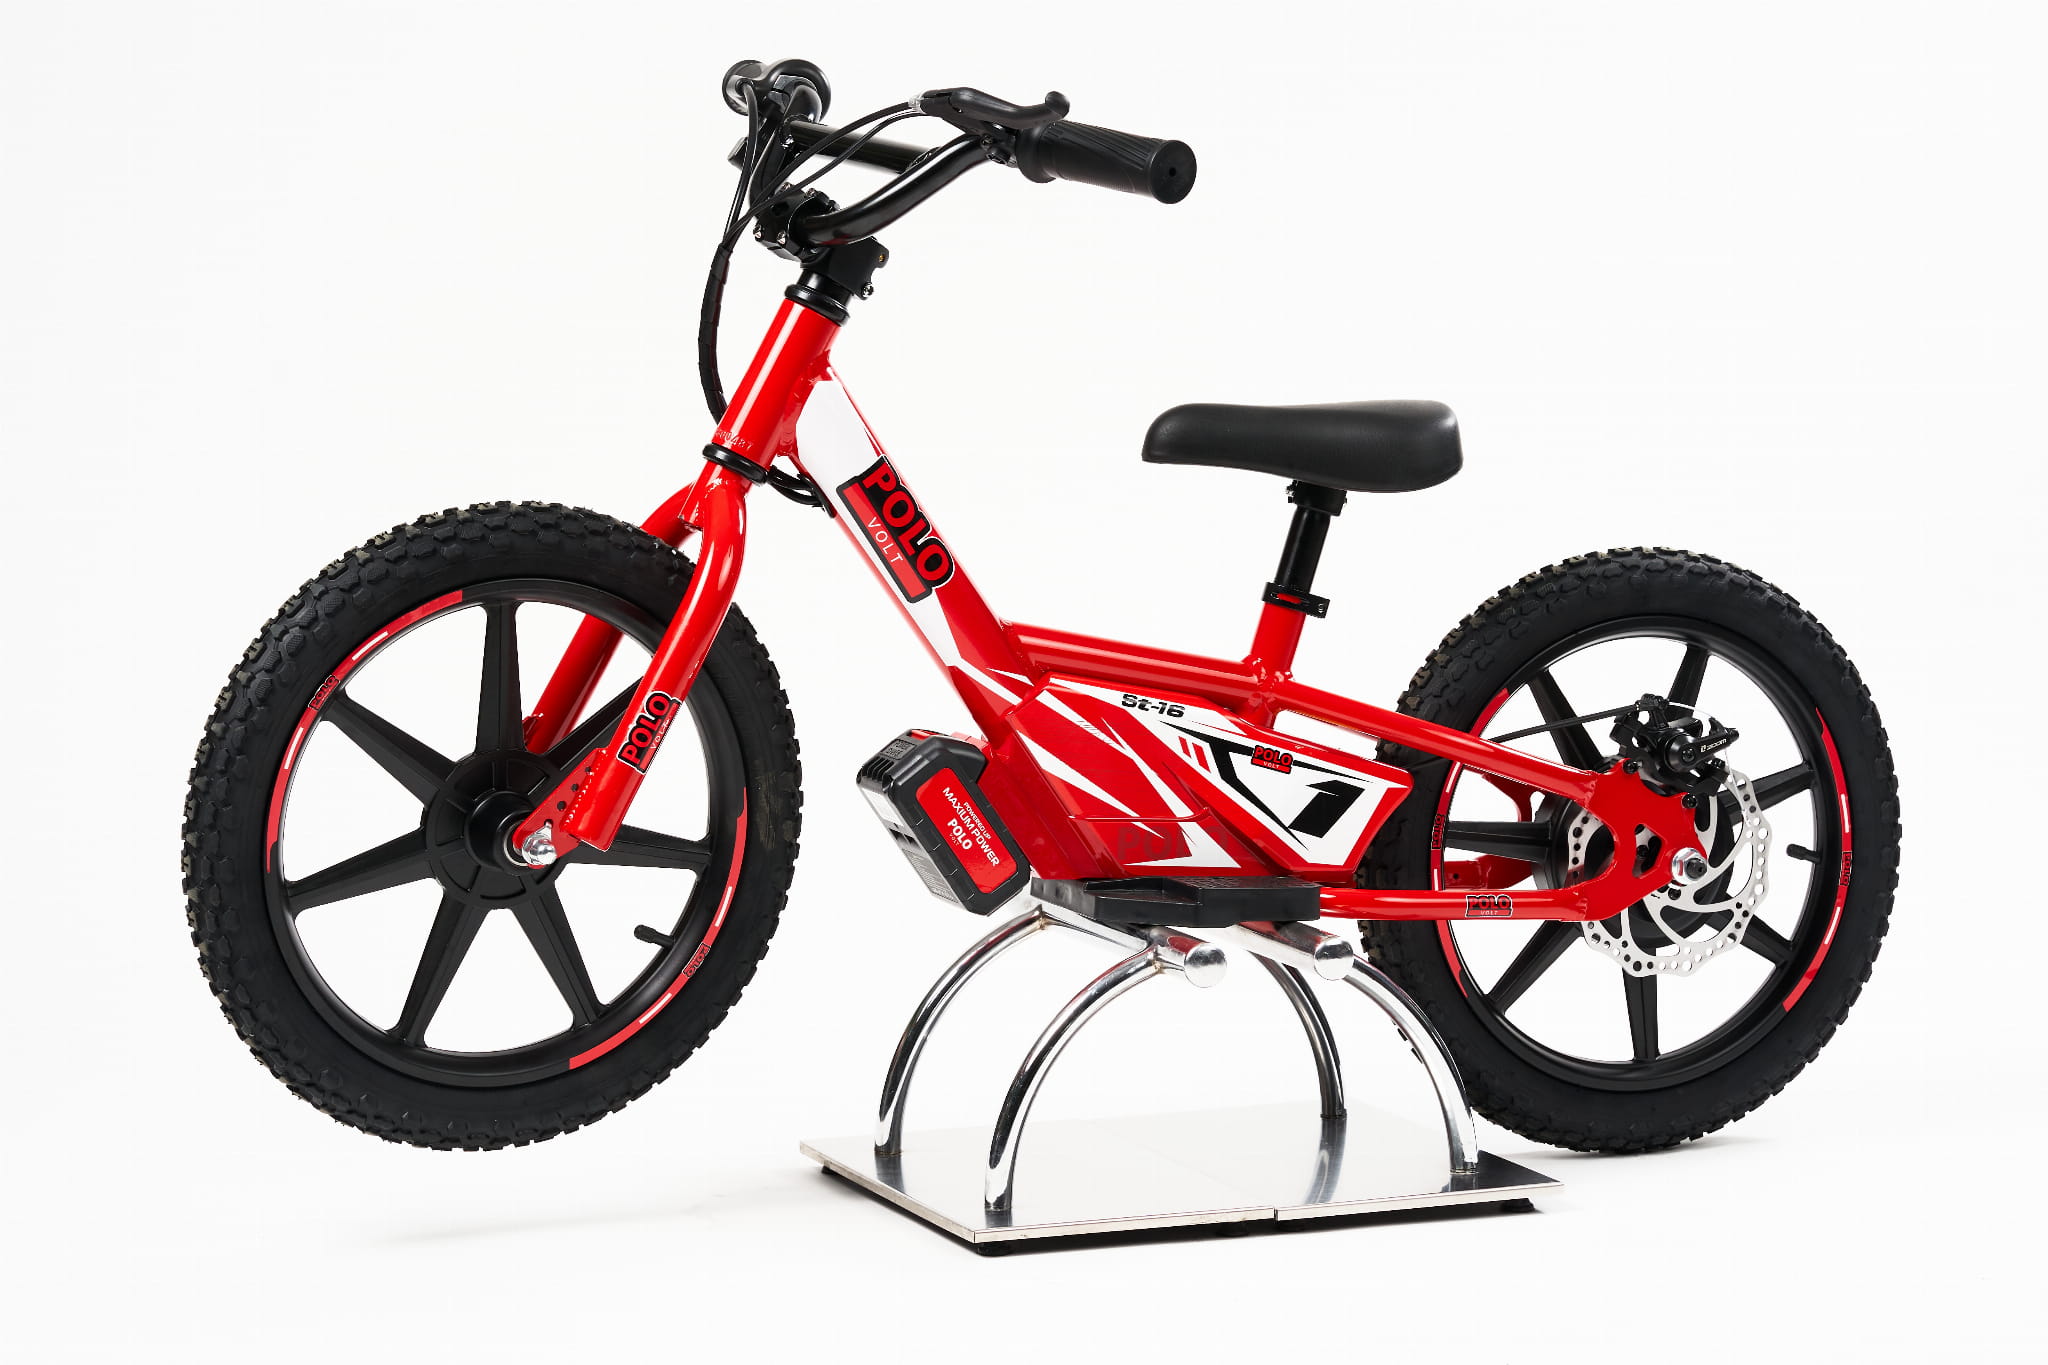 Polovolt ST16 Kids Electric Balance Bike Red - polovolt elektrische kinderfiets crossmoto rood - draisienne pour enfant electrique polovolt rouge